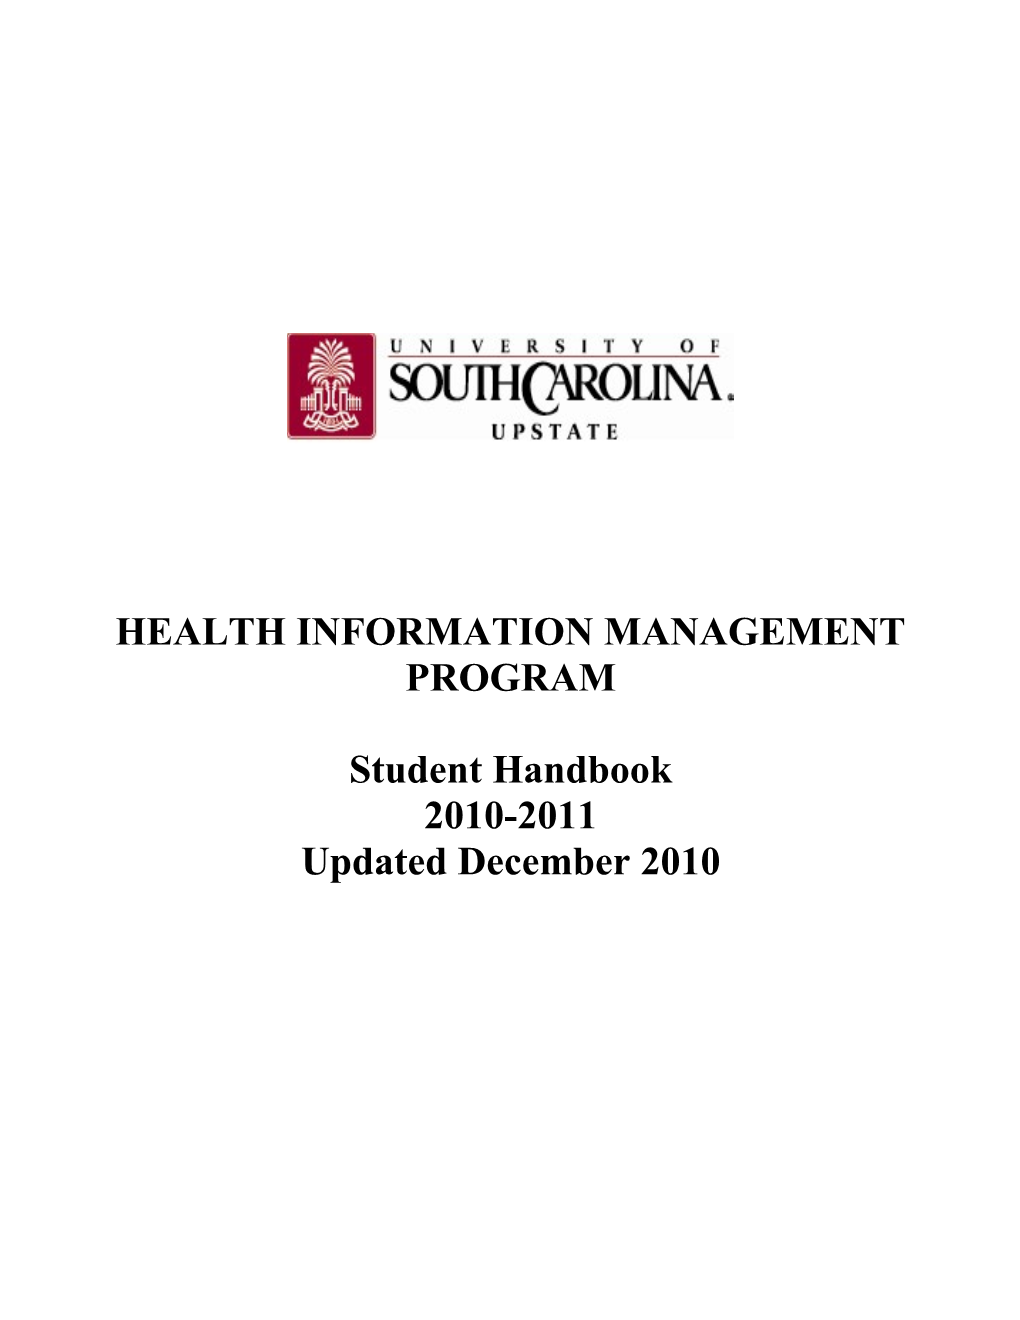 Health Information Management Program